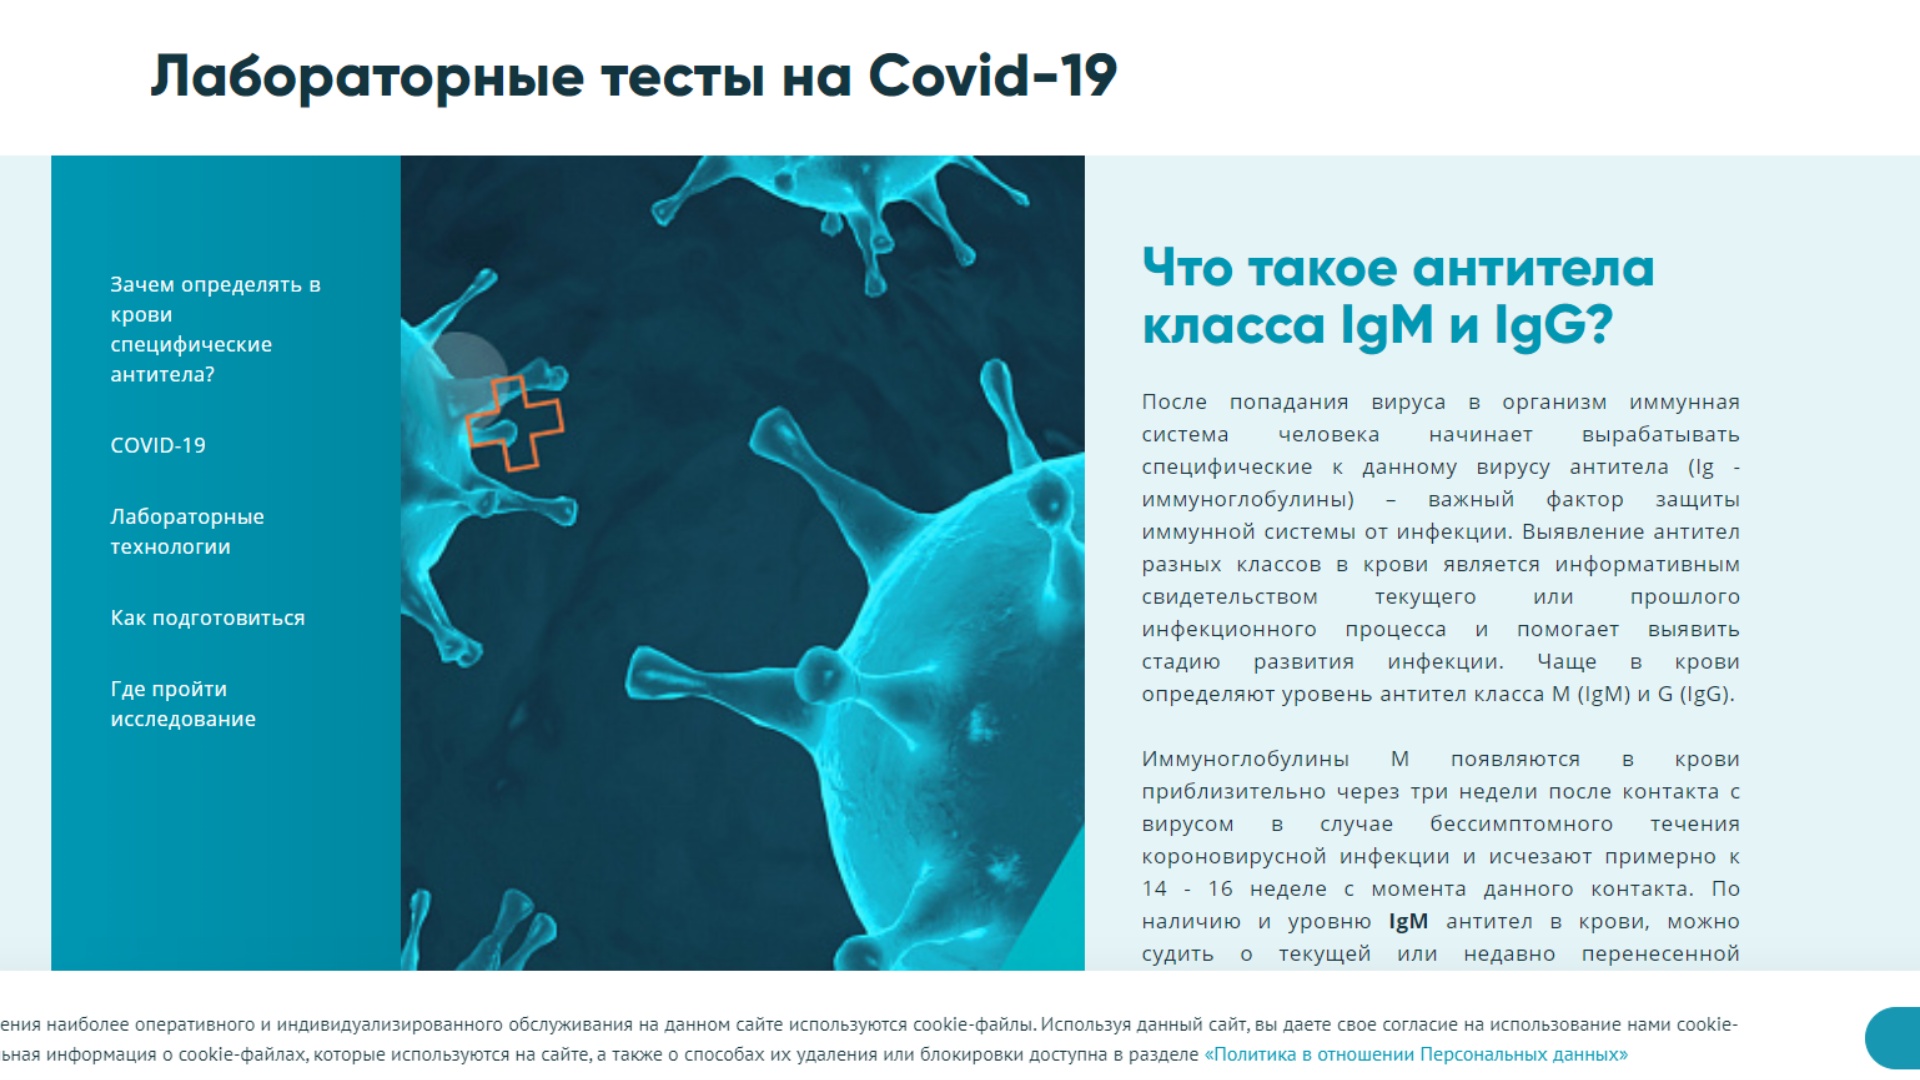 Анализы крови на антитела Covid-19